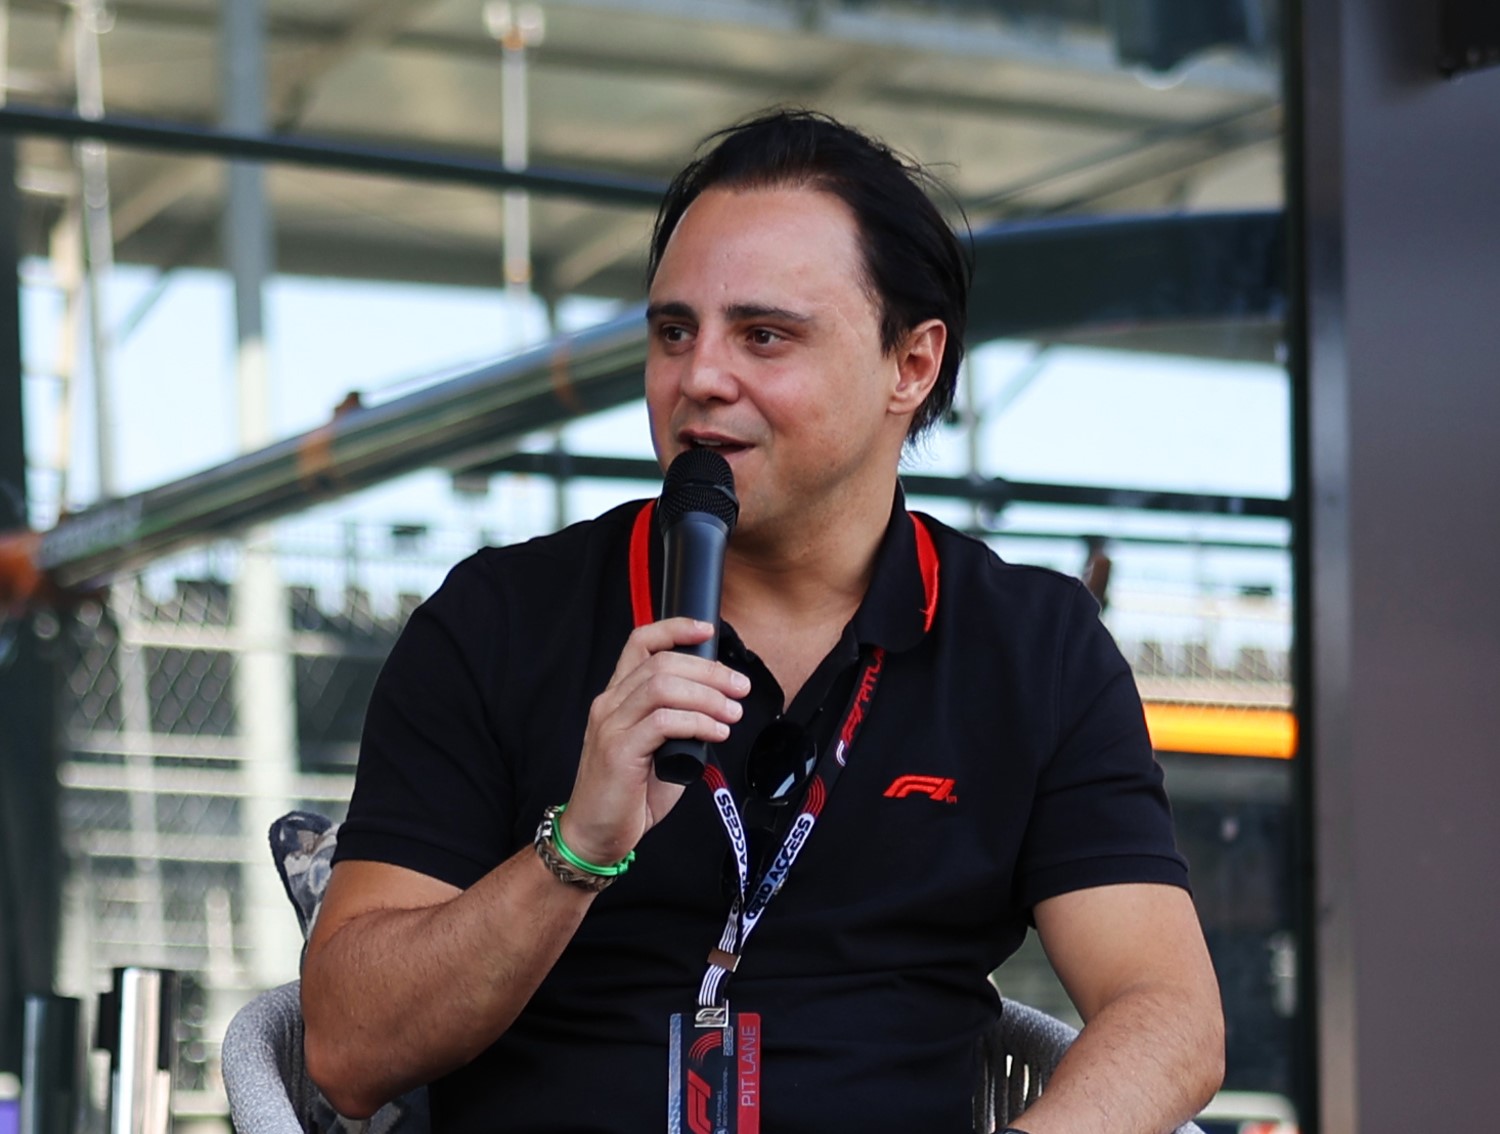 Felipe Massa chat to the audience during the Saudi Arabian GP at Jeddah Street Circuit on Thursday March 16, 2023 in Jeddah, Saudi Arabia. (Photo by Glenn Dunbar / LAT Images)